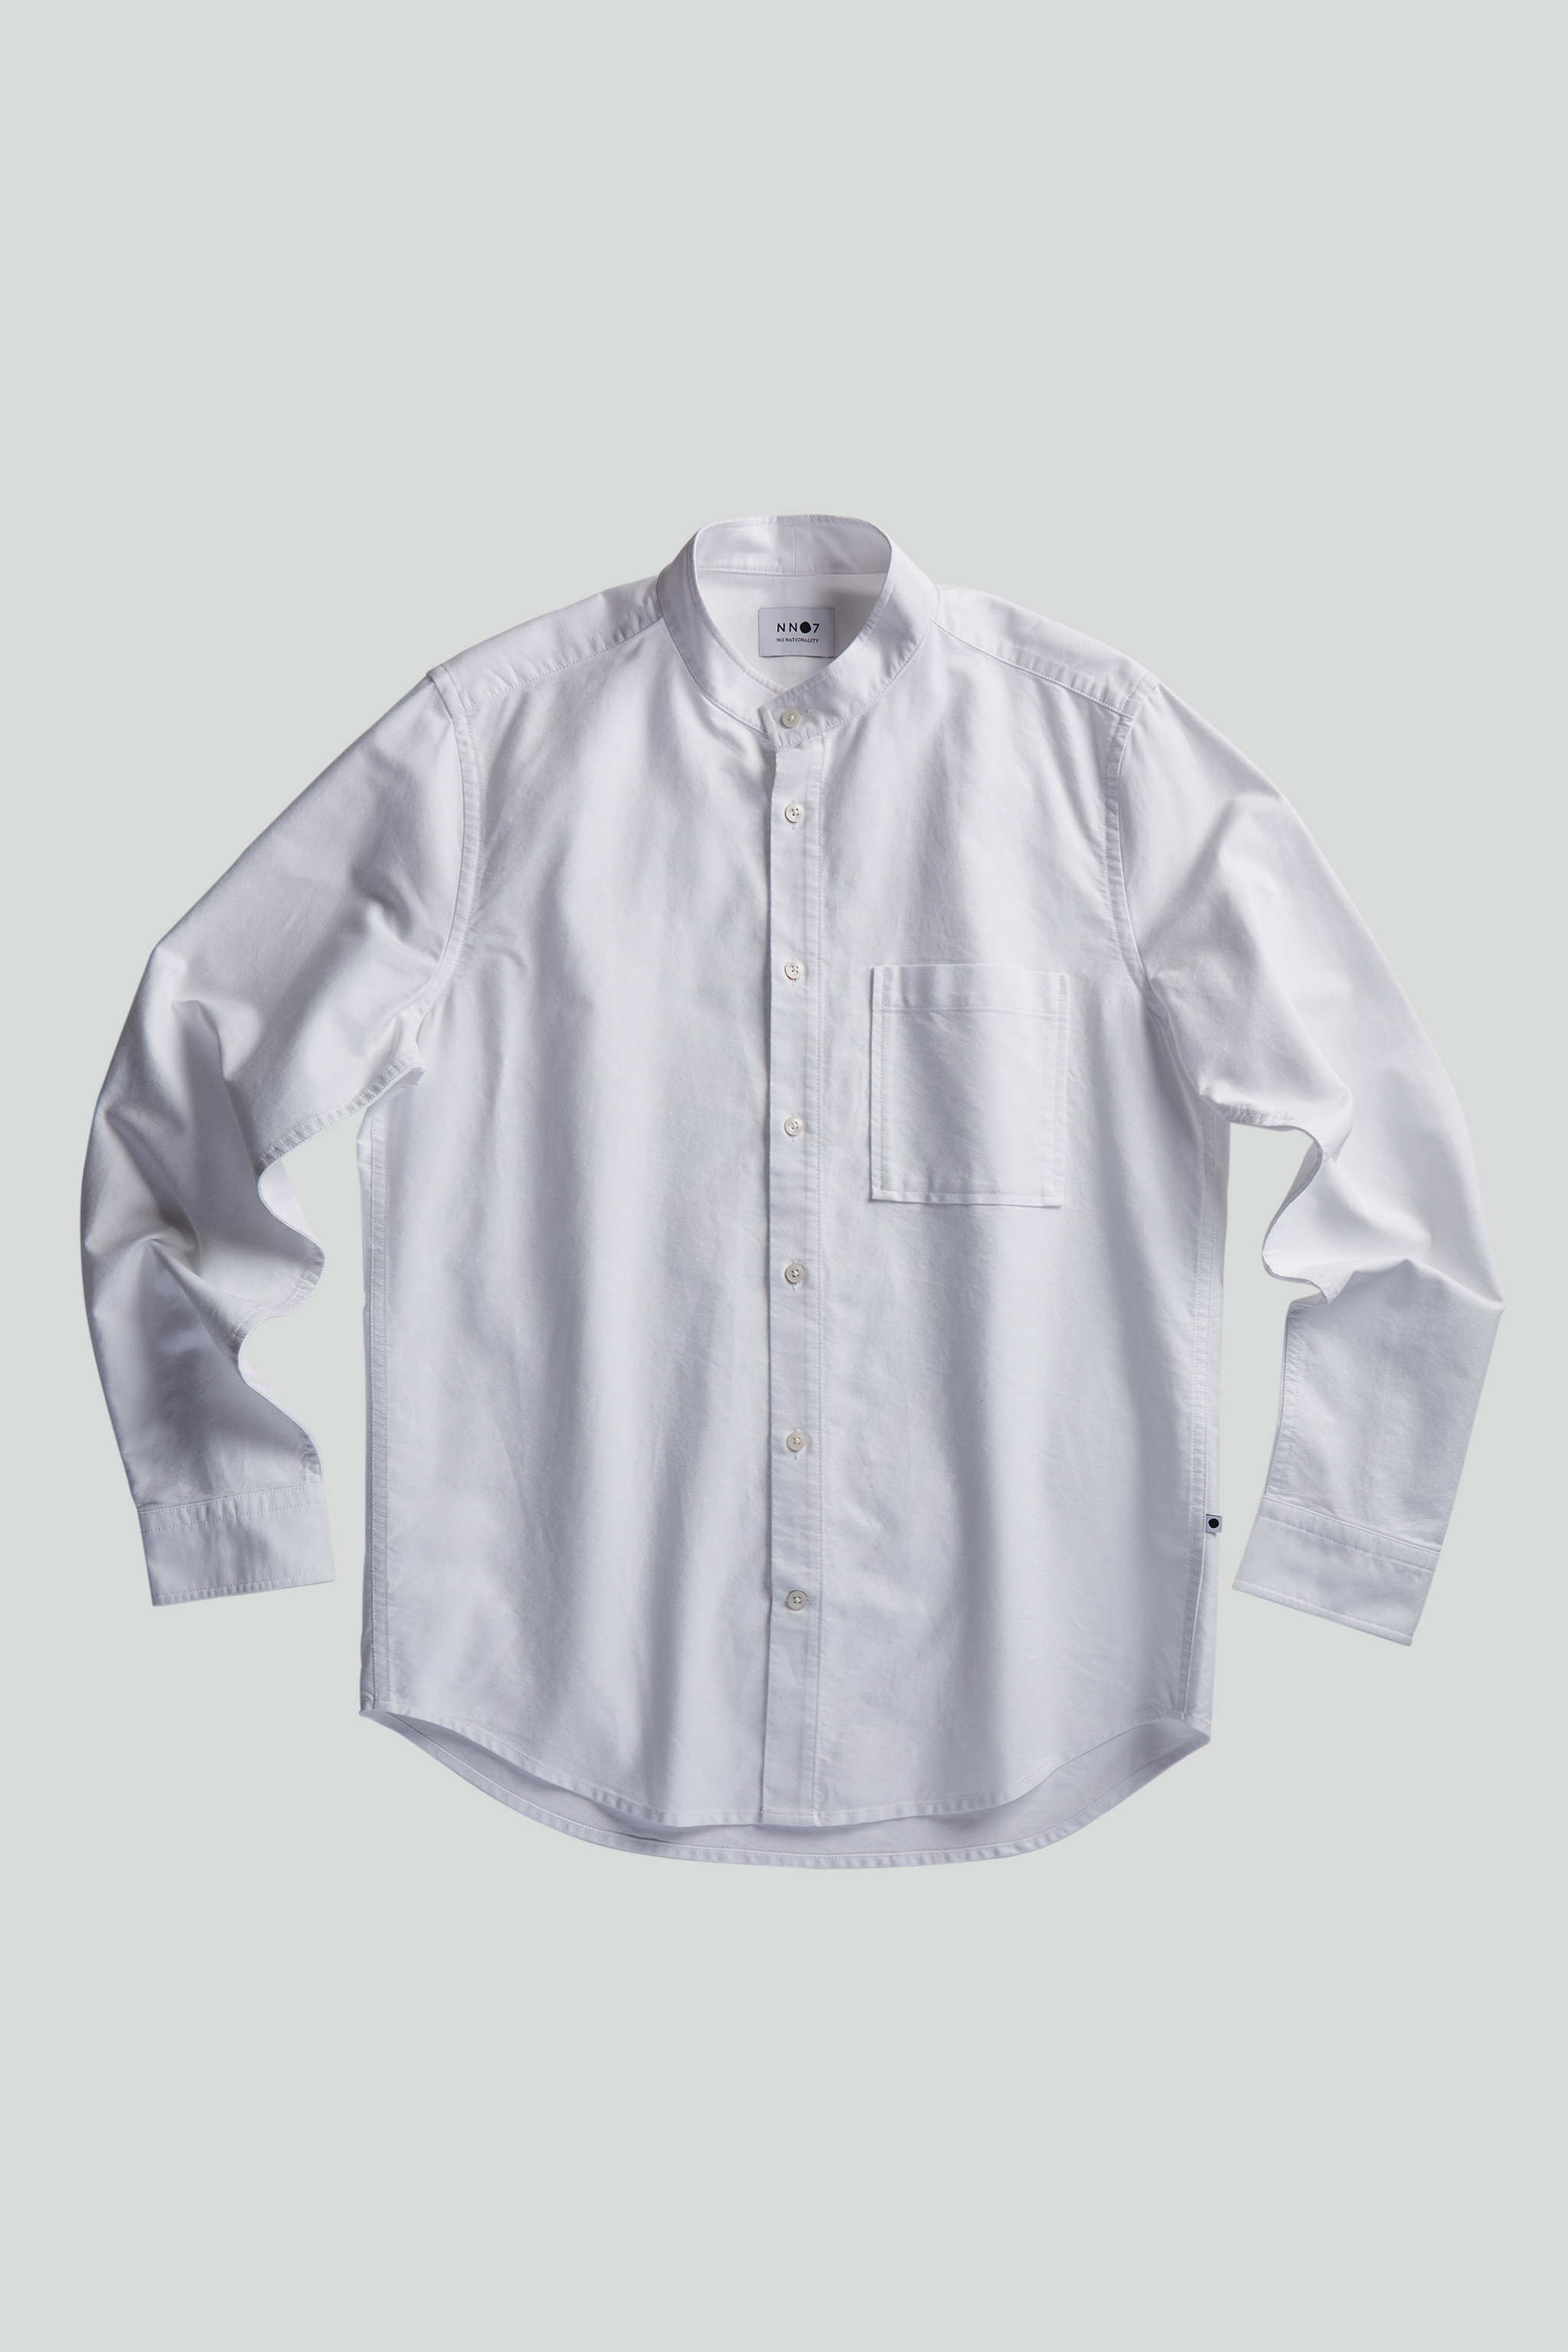 Eddie 5031 men's shirt - White - Buy online at NN.07®